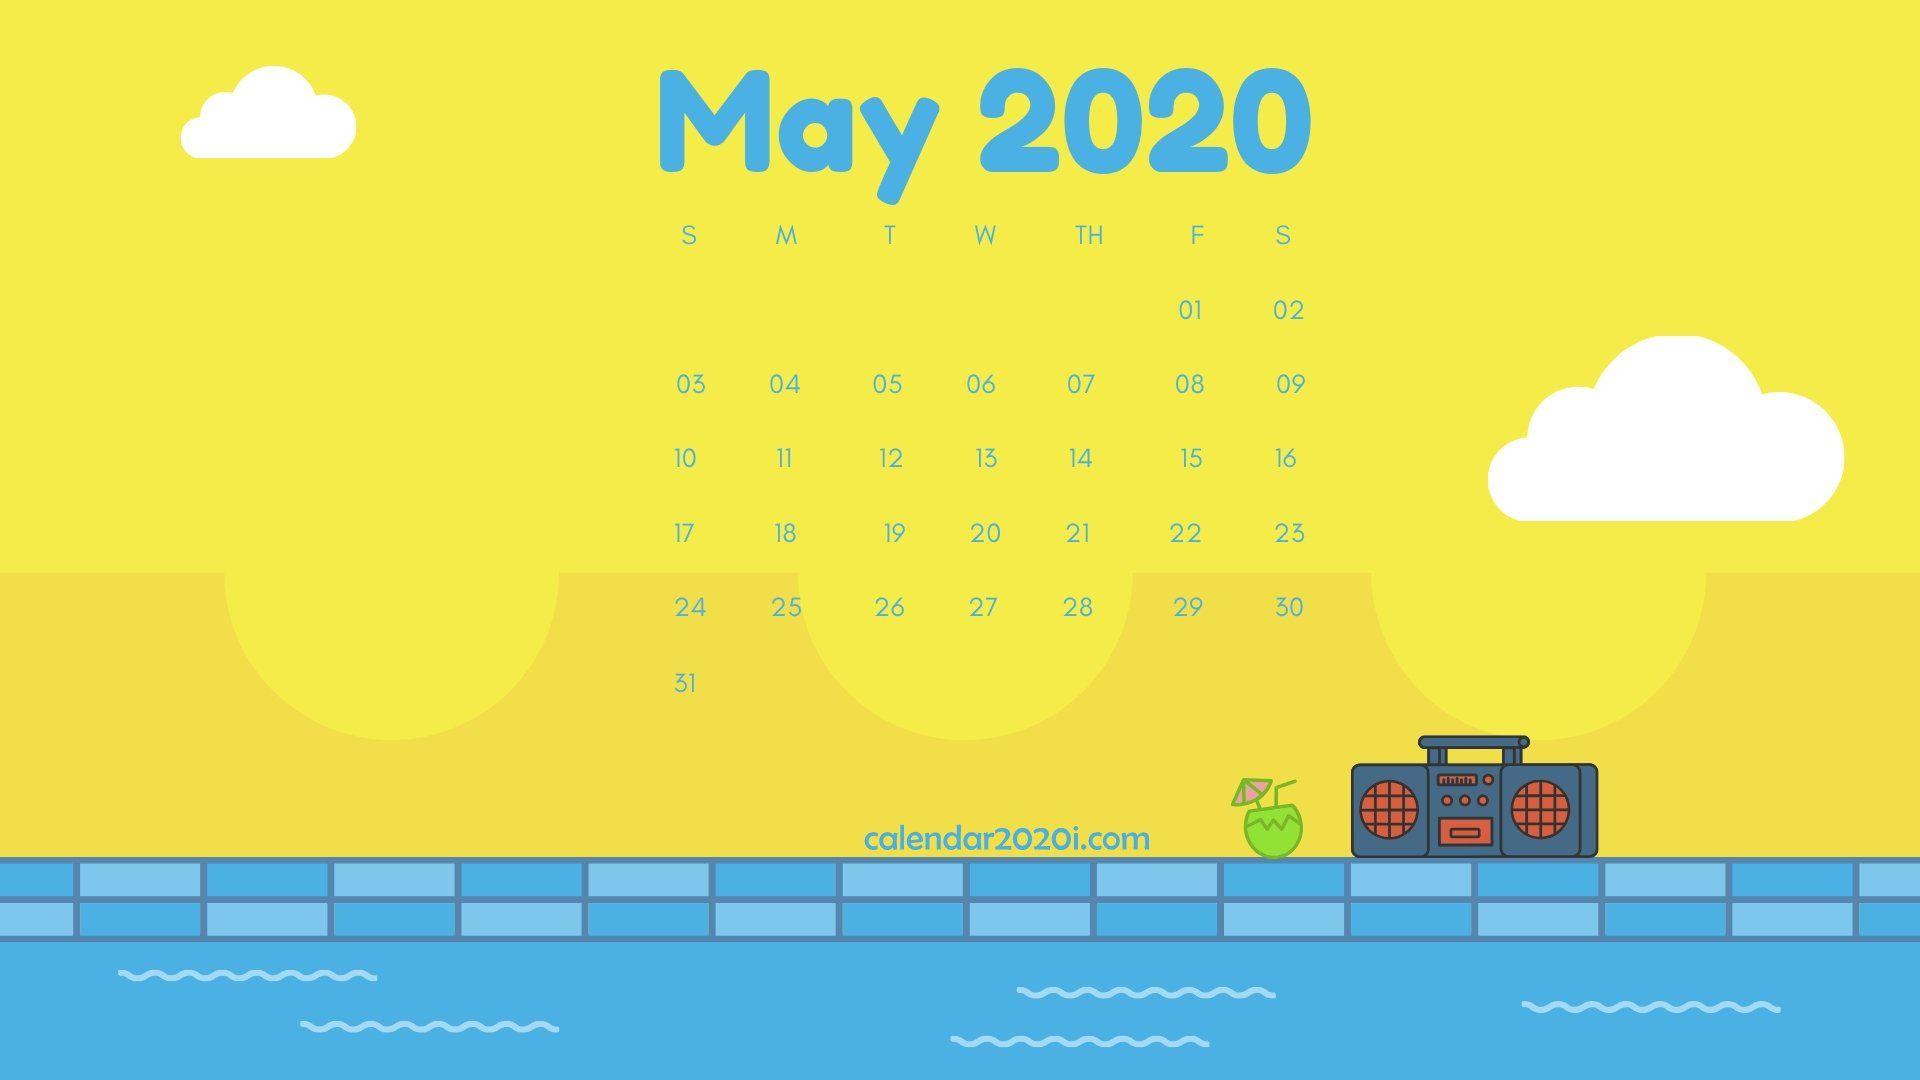 May 2020 Calendar Desktop Wallpaper. Calendar 2020 in 2019